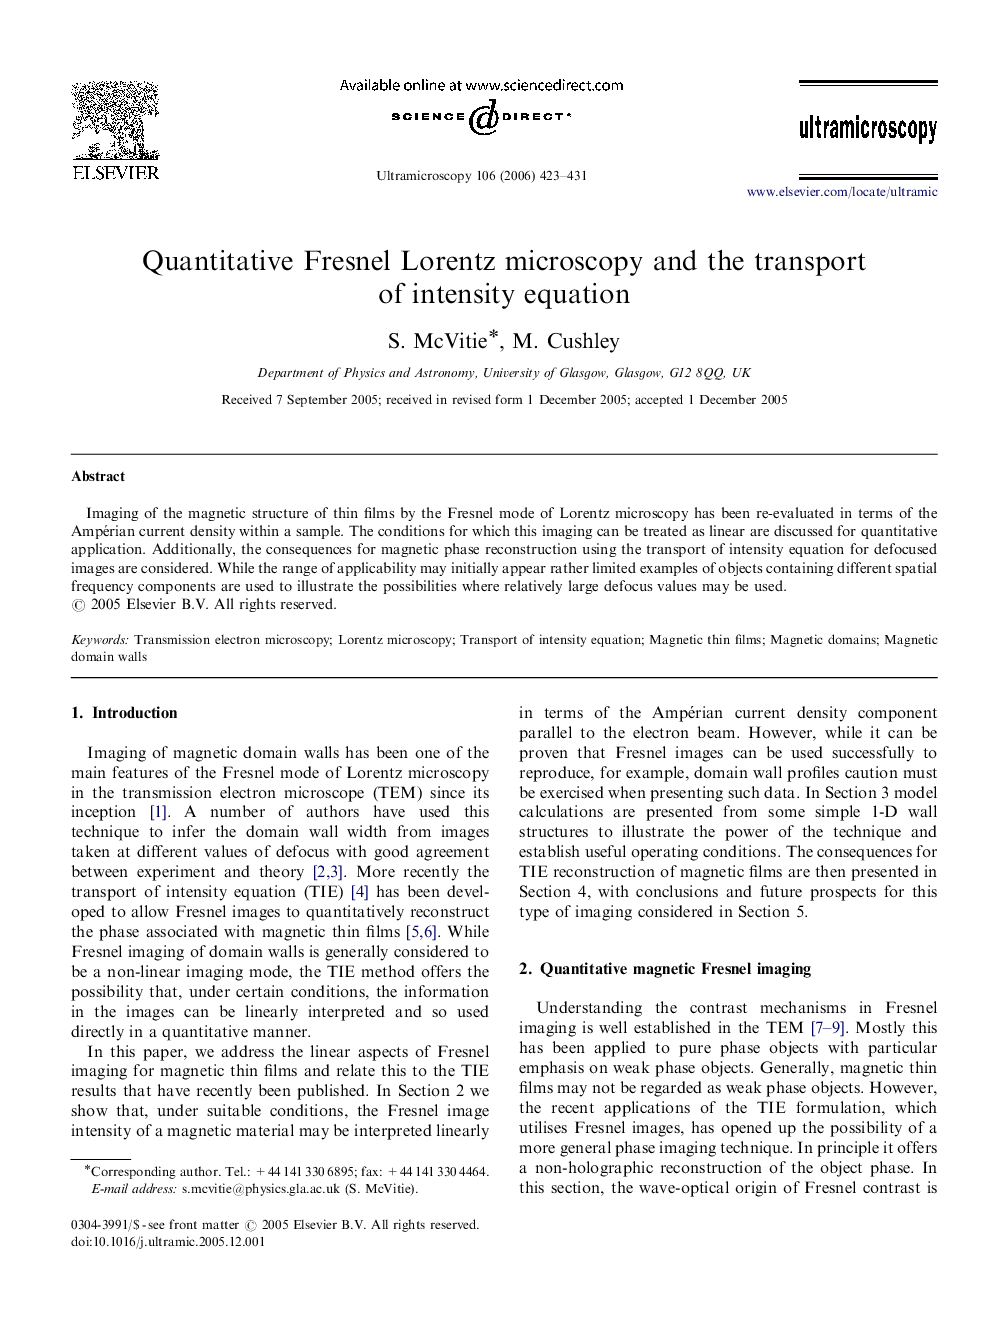 Quantitative Fresnel Lorentz microscopy and the transport of intensity equation